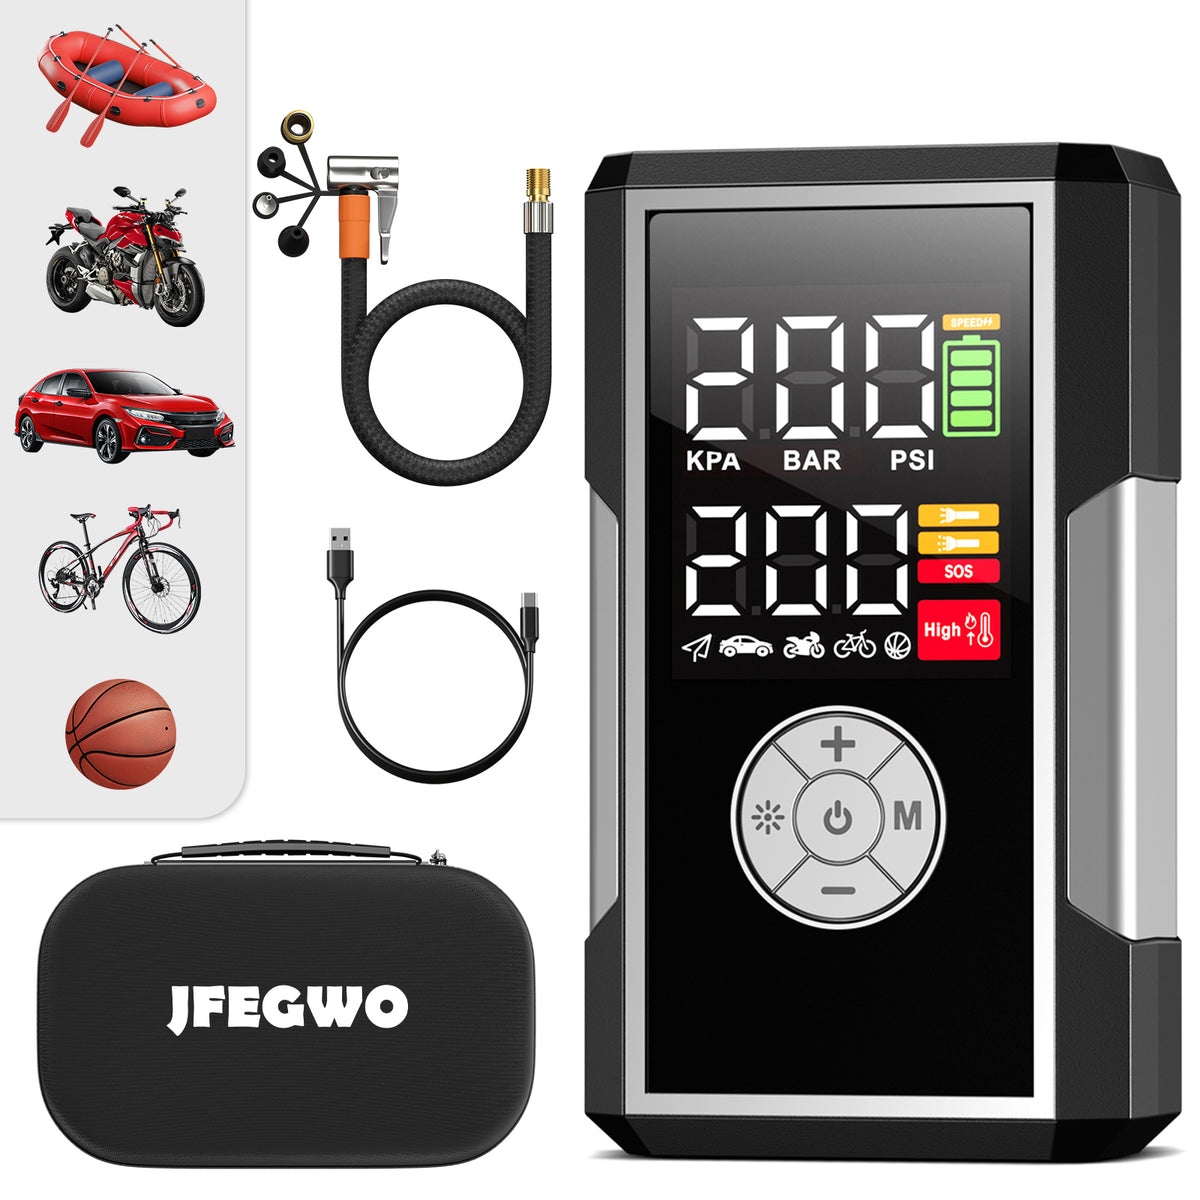 JFEGWO Portable Air Inflator, Grey